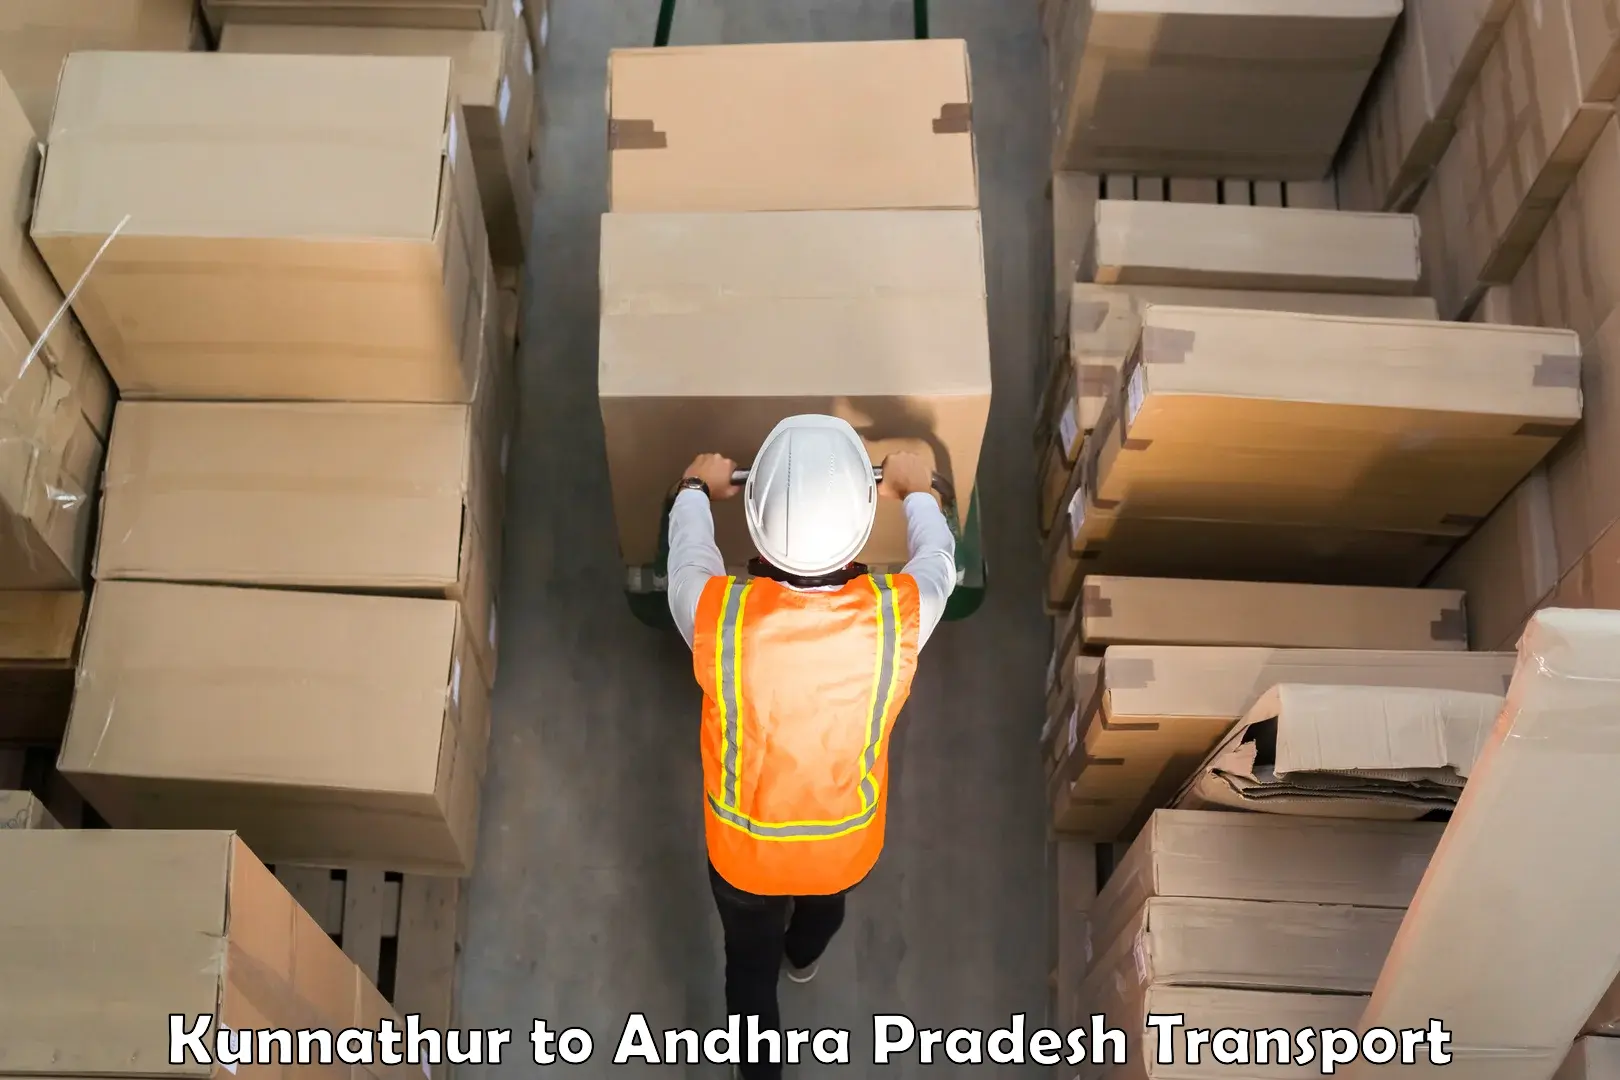 Truck transport companies in India Kunnathur to Mudigubba